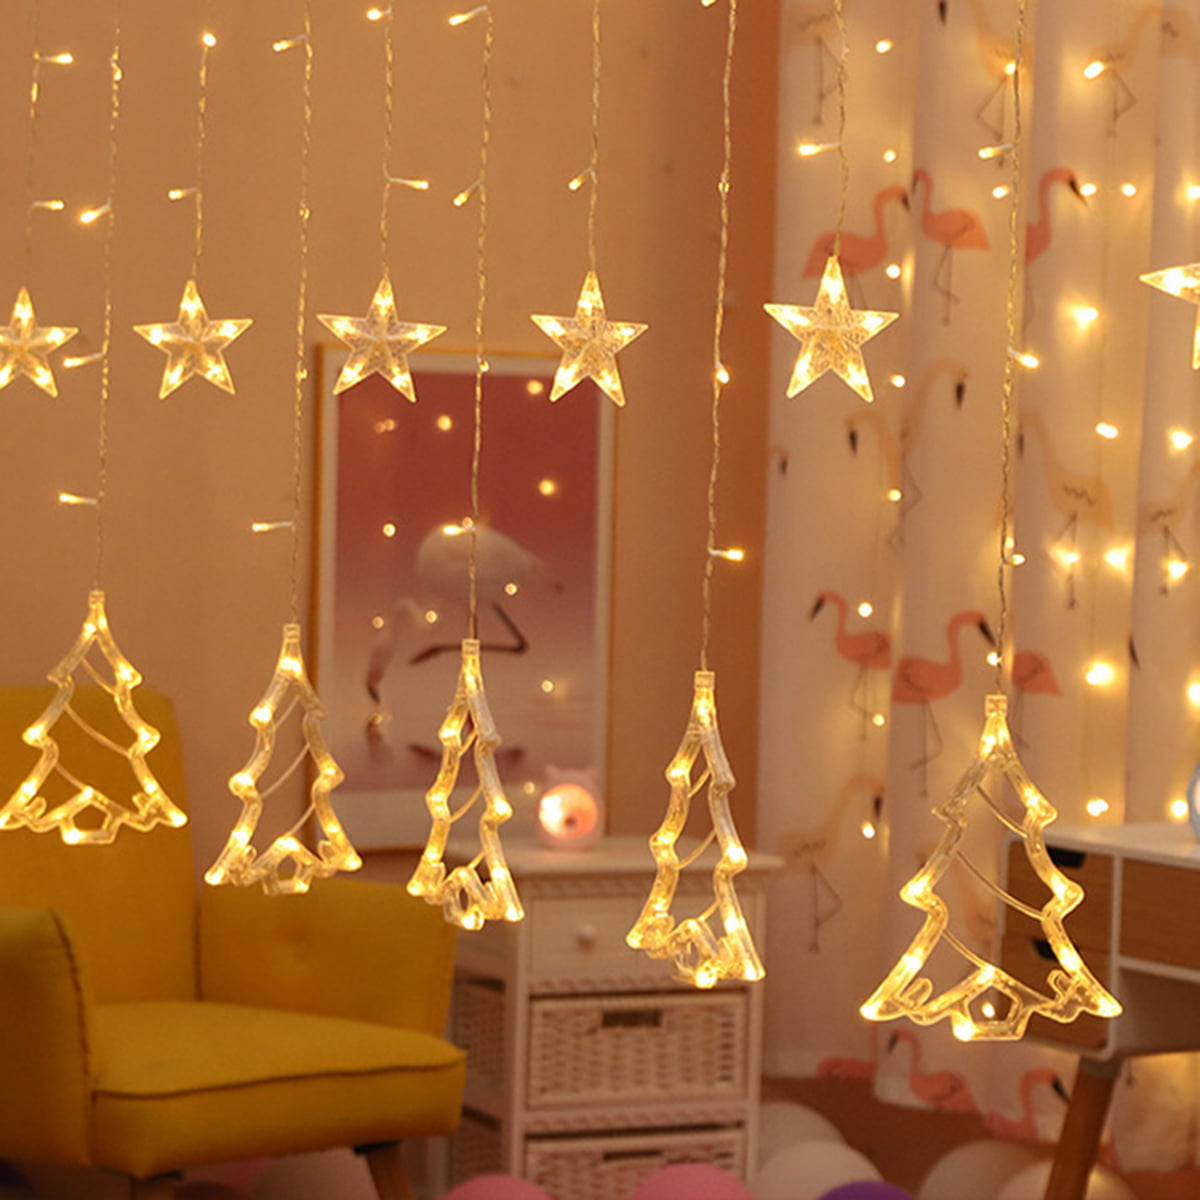 LED Christmas Star String Lights Hanging Lights Window Room Garden Decor Lights 